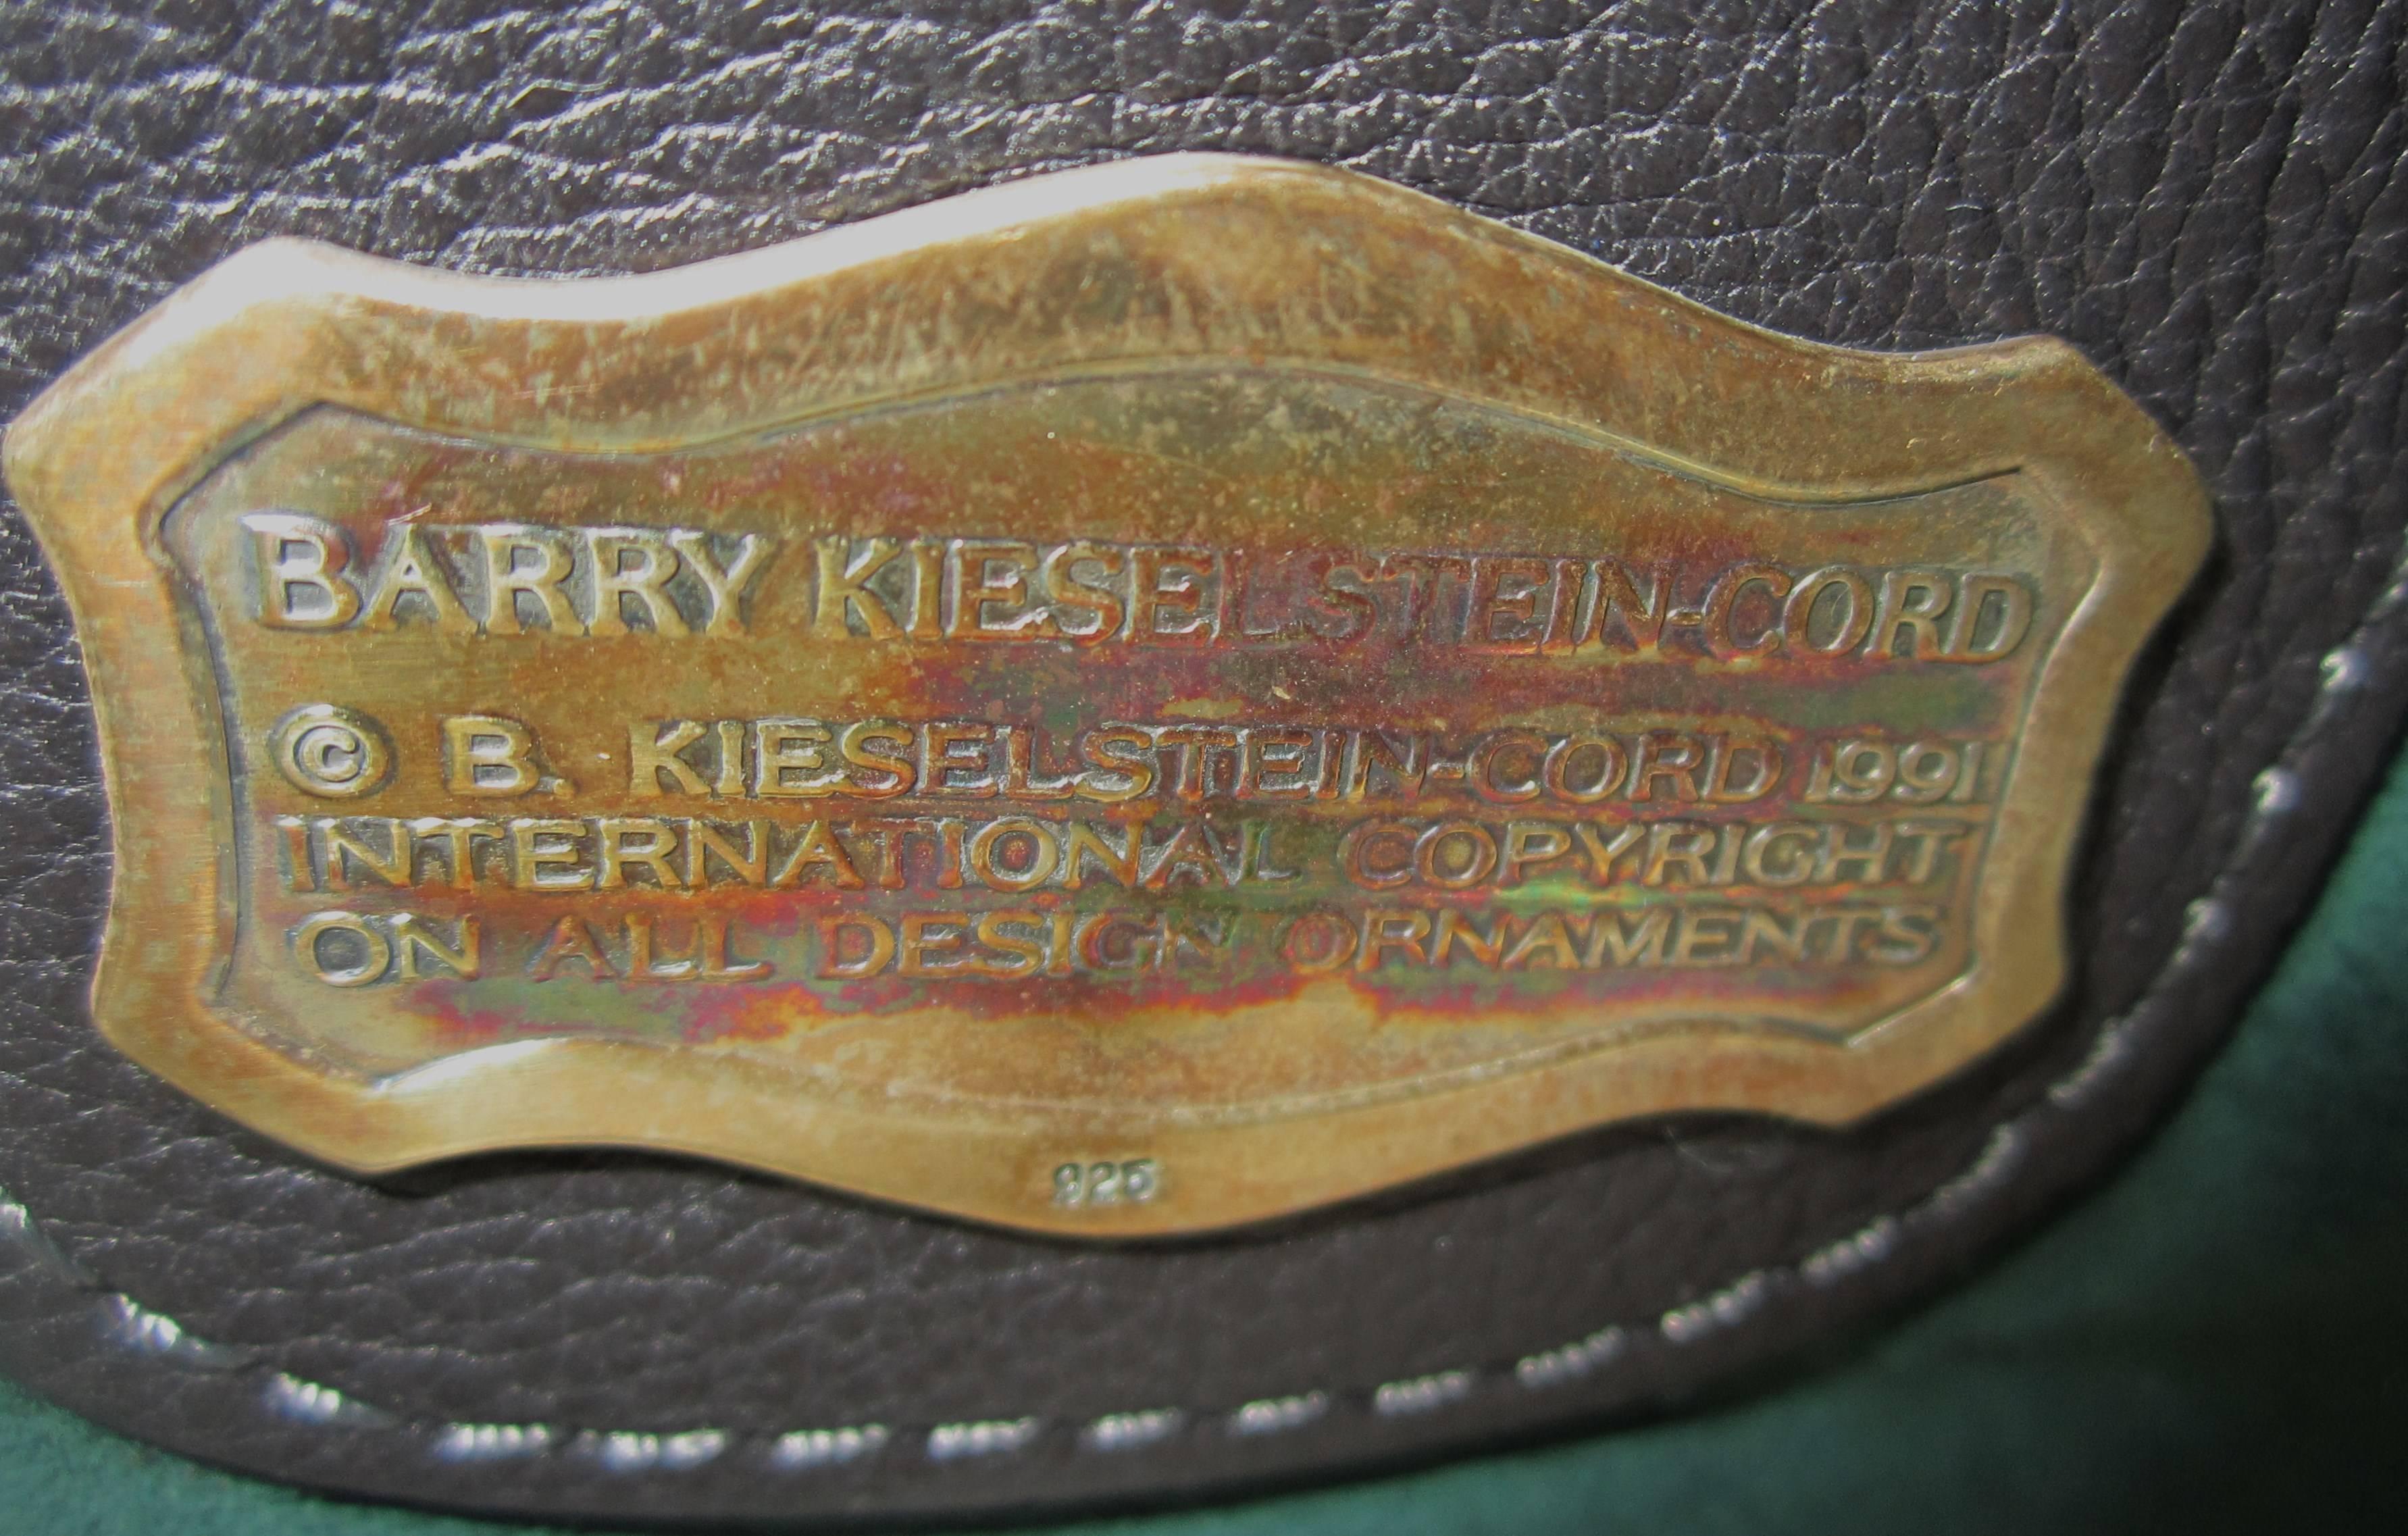 Barry Kieselstein Cord Steel Gray Suede Leather Drawstring Handbag 1